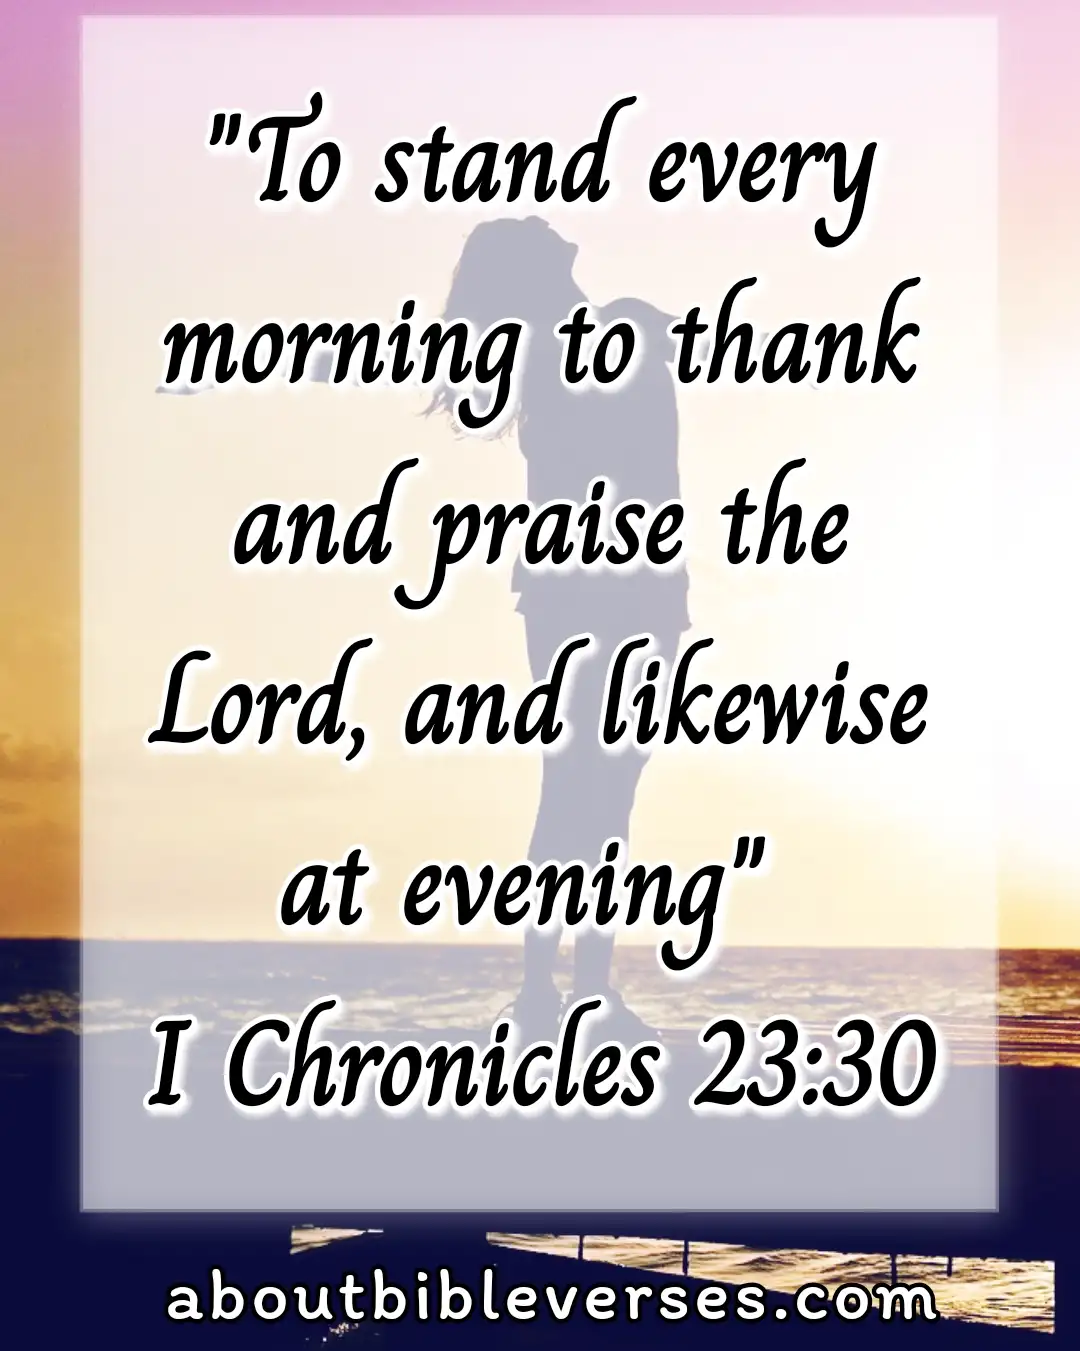 Good morning bible verses (1 Chronicles 23:30)